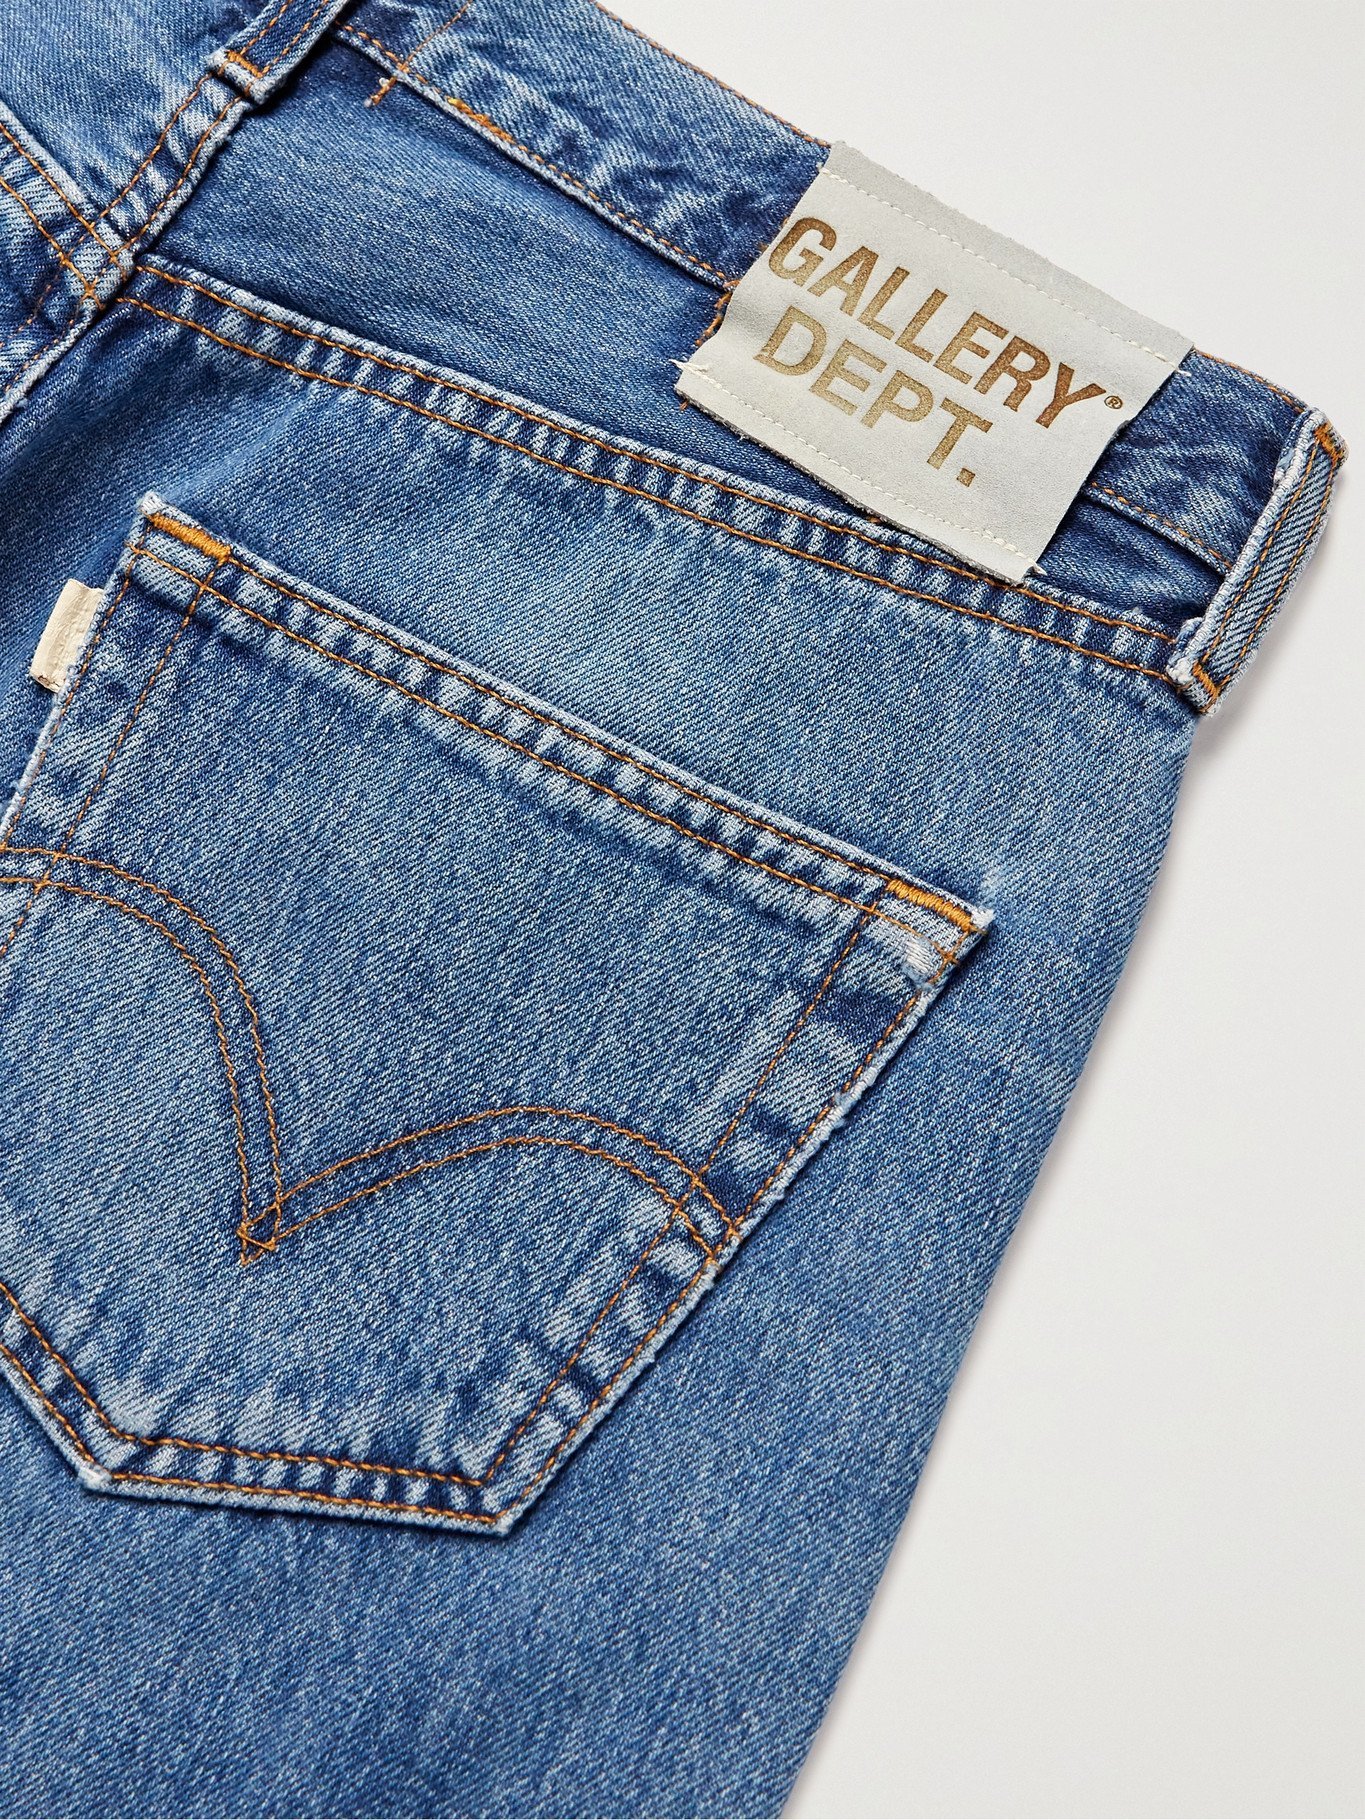 GALLERY DEPT. - Slim-Fit Distressed Denim Jeans - Blue Gallery Dept.